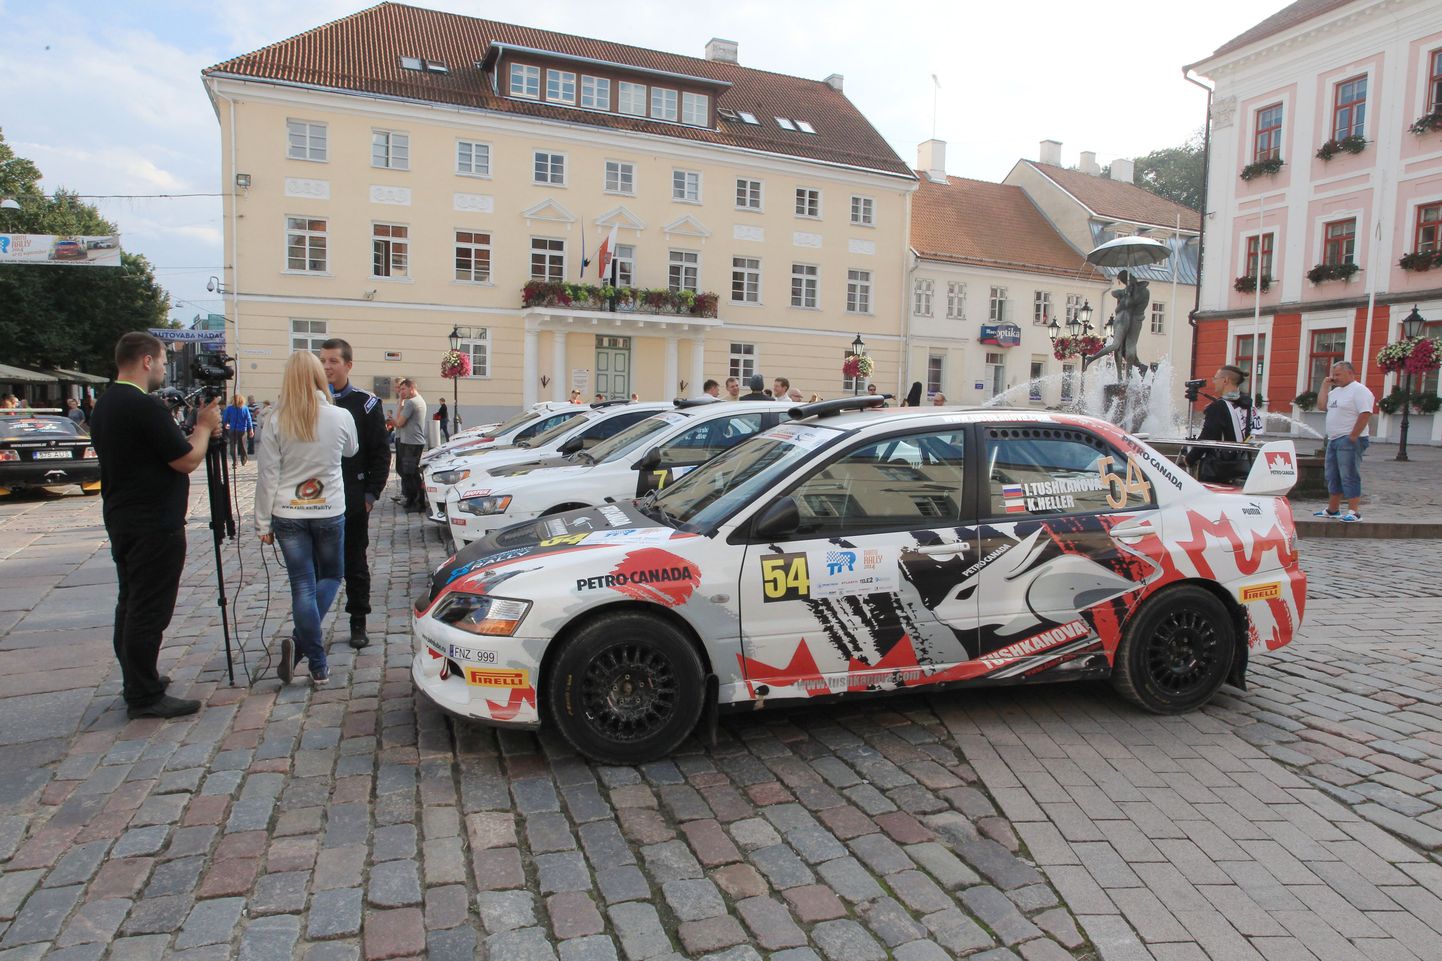 Pildil Tartu Rally 2014 pidulik avamine Tartu Raekoja platsil.